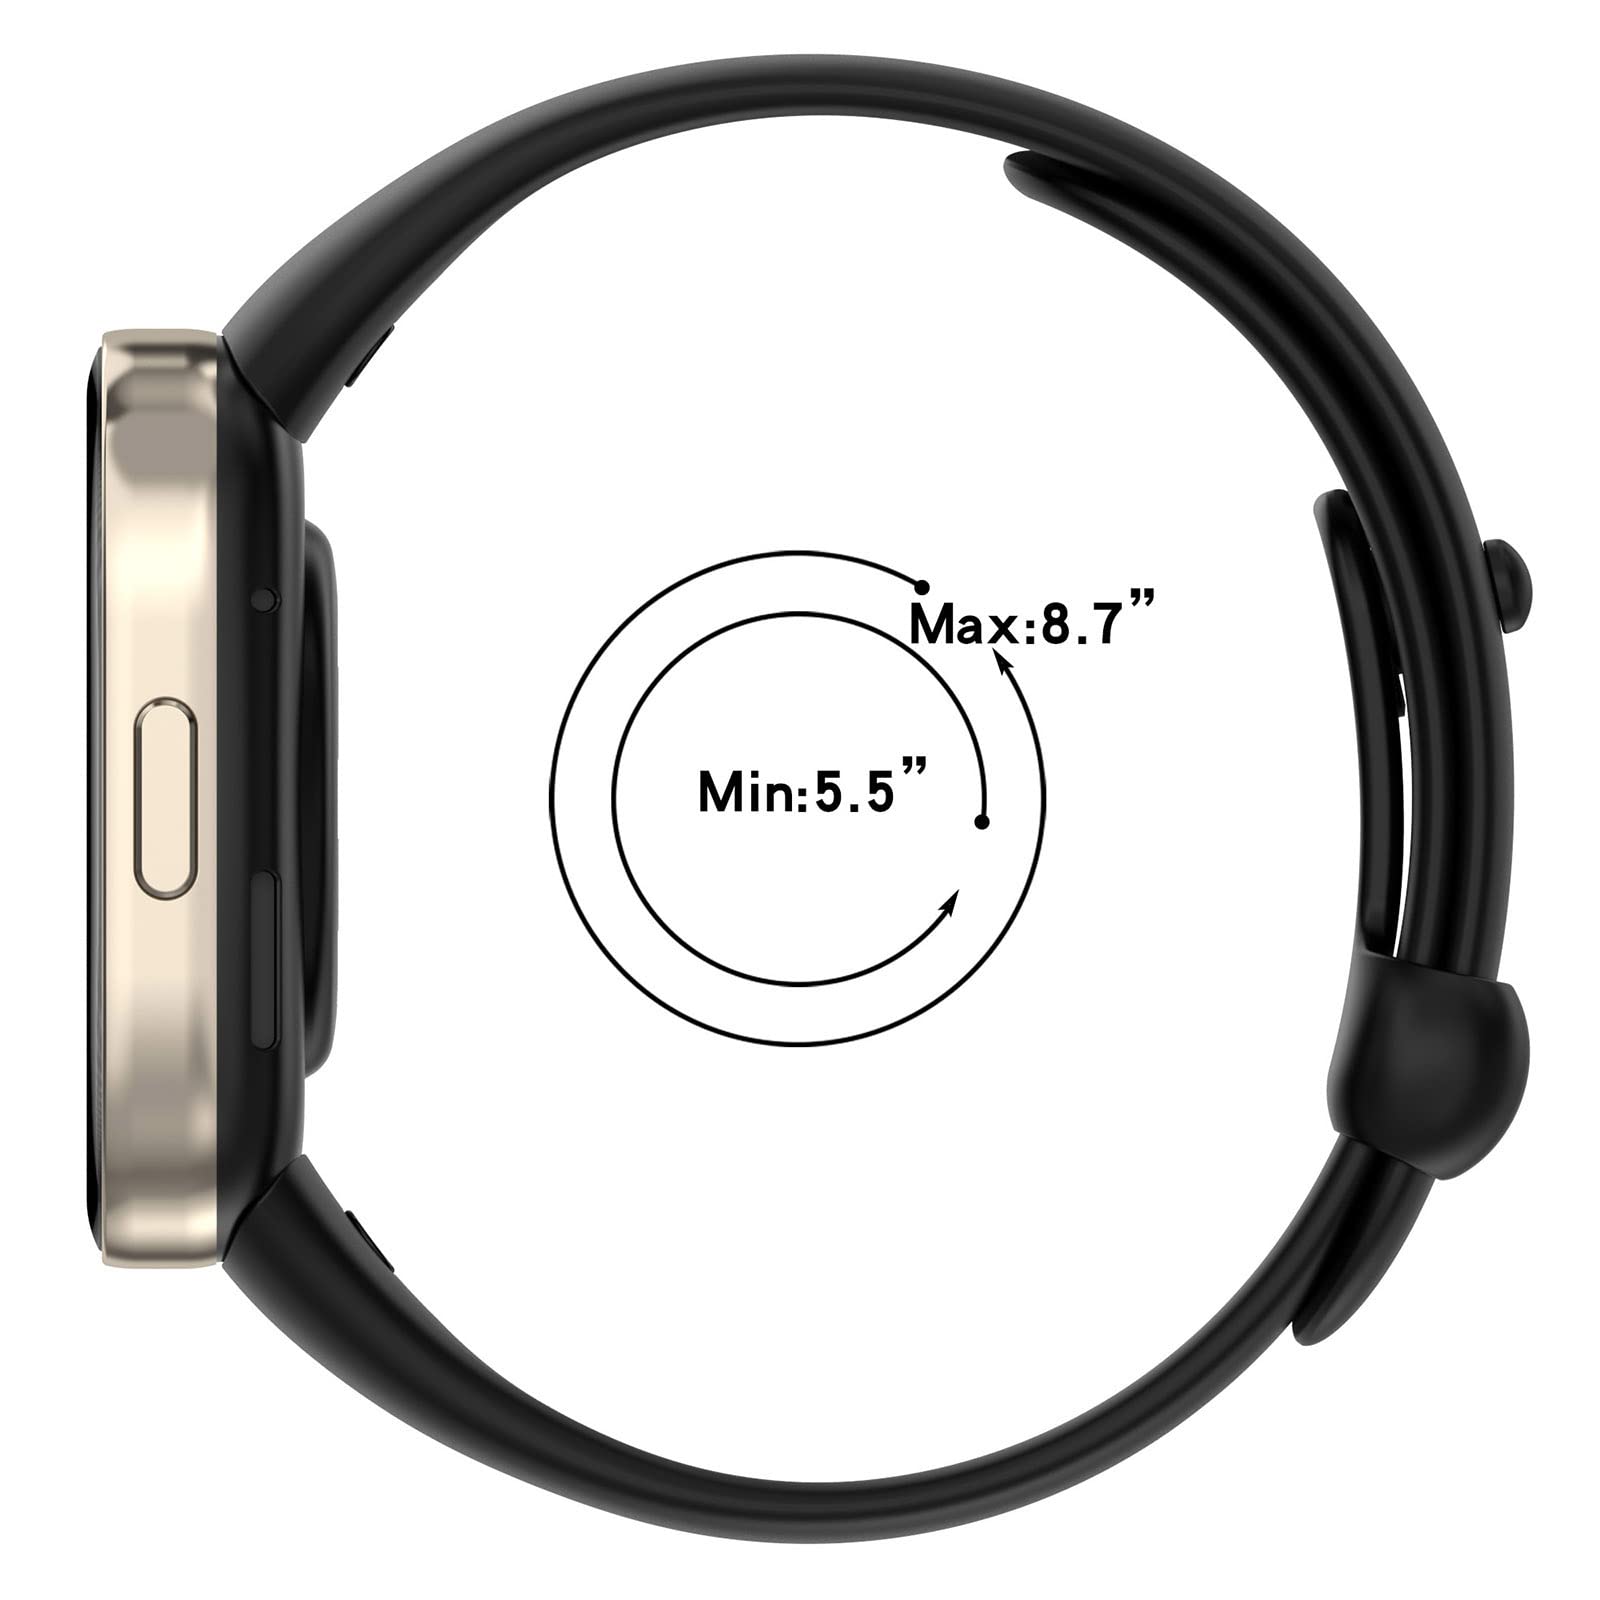 Lemspum Sport Silicone Wrist Bands Compatible with Xiaomi Redmi Watch 3/ Mi Watch Lite 3 Replacement Accessories Strap Waterproof One Size 5.5